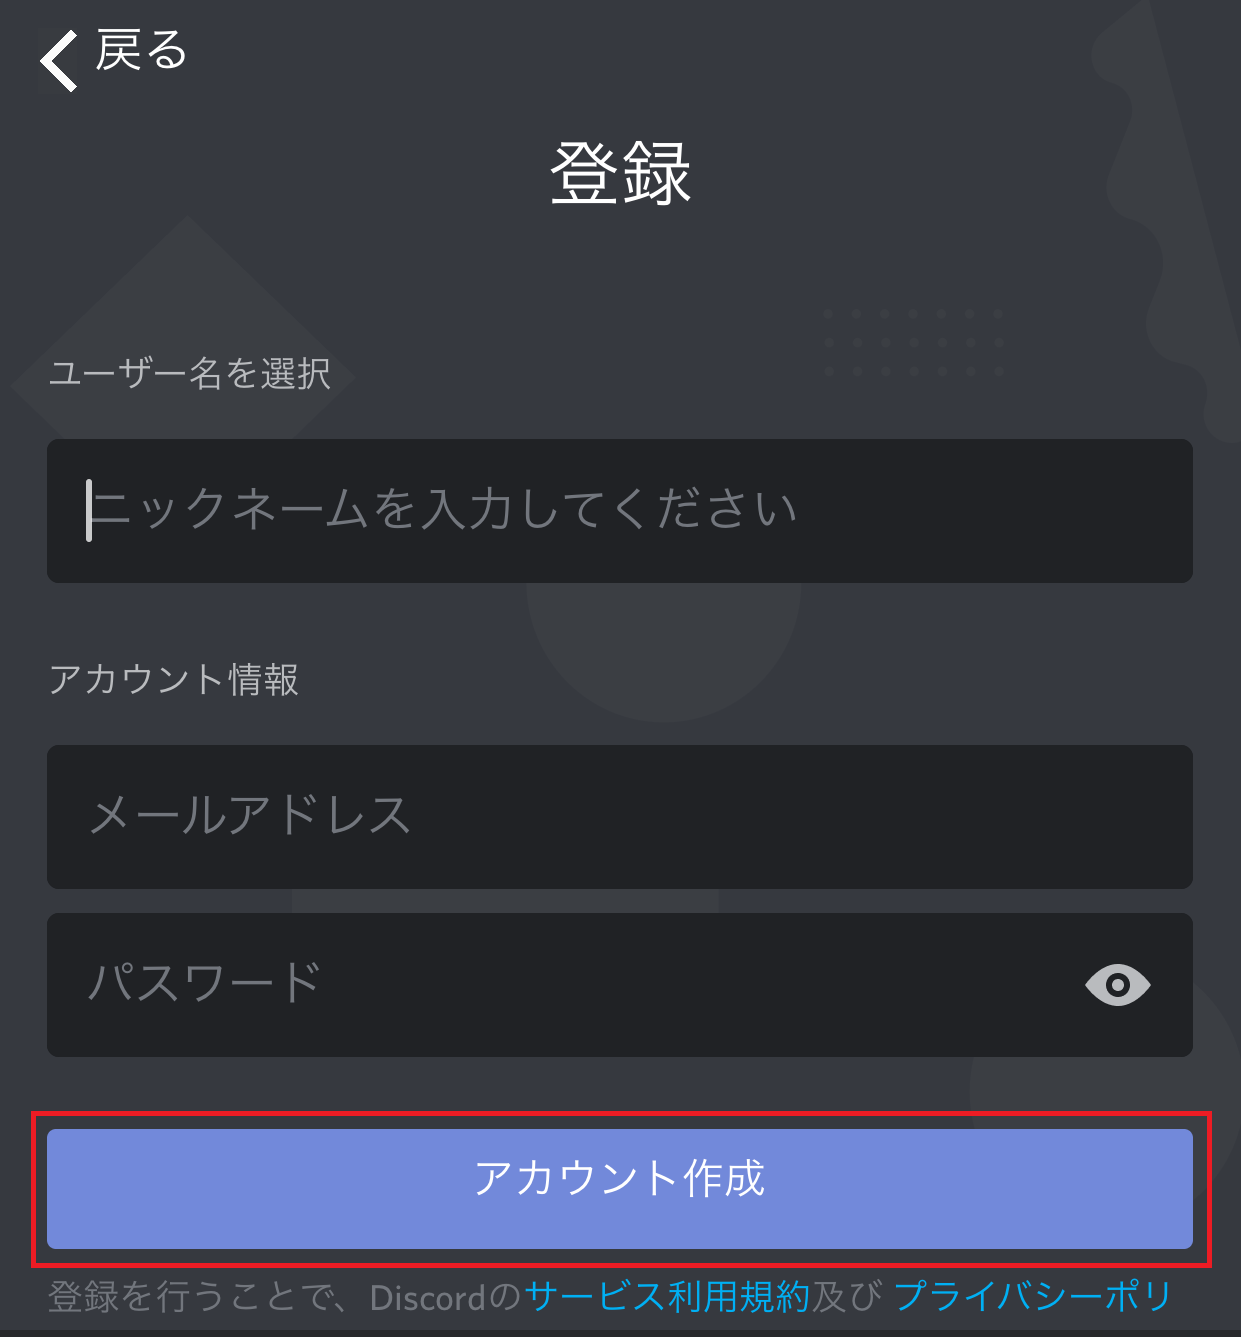 Mlbパーフェクトイニング 公式discordサーバーオープンのご案内 Gamevil Inc 日本公式ブログ